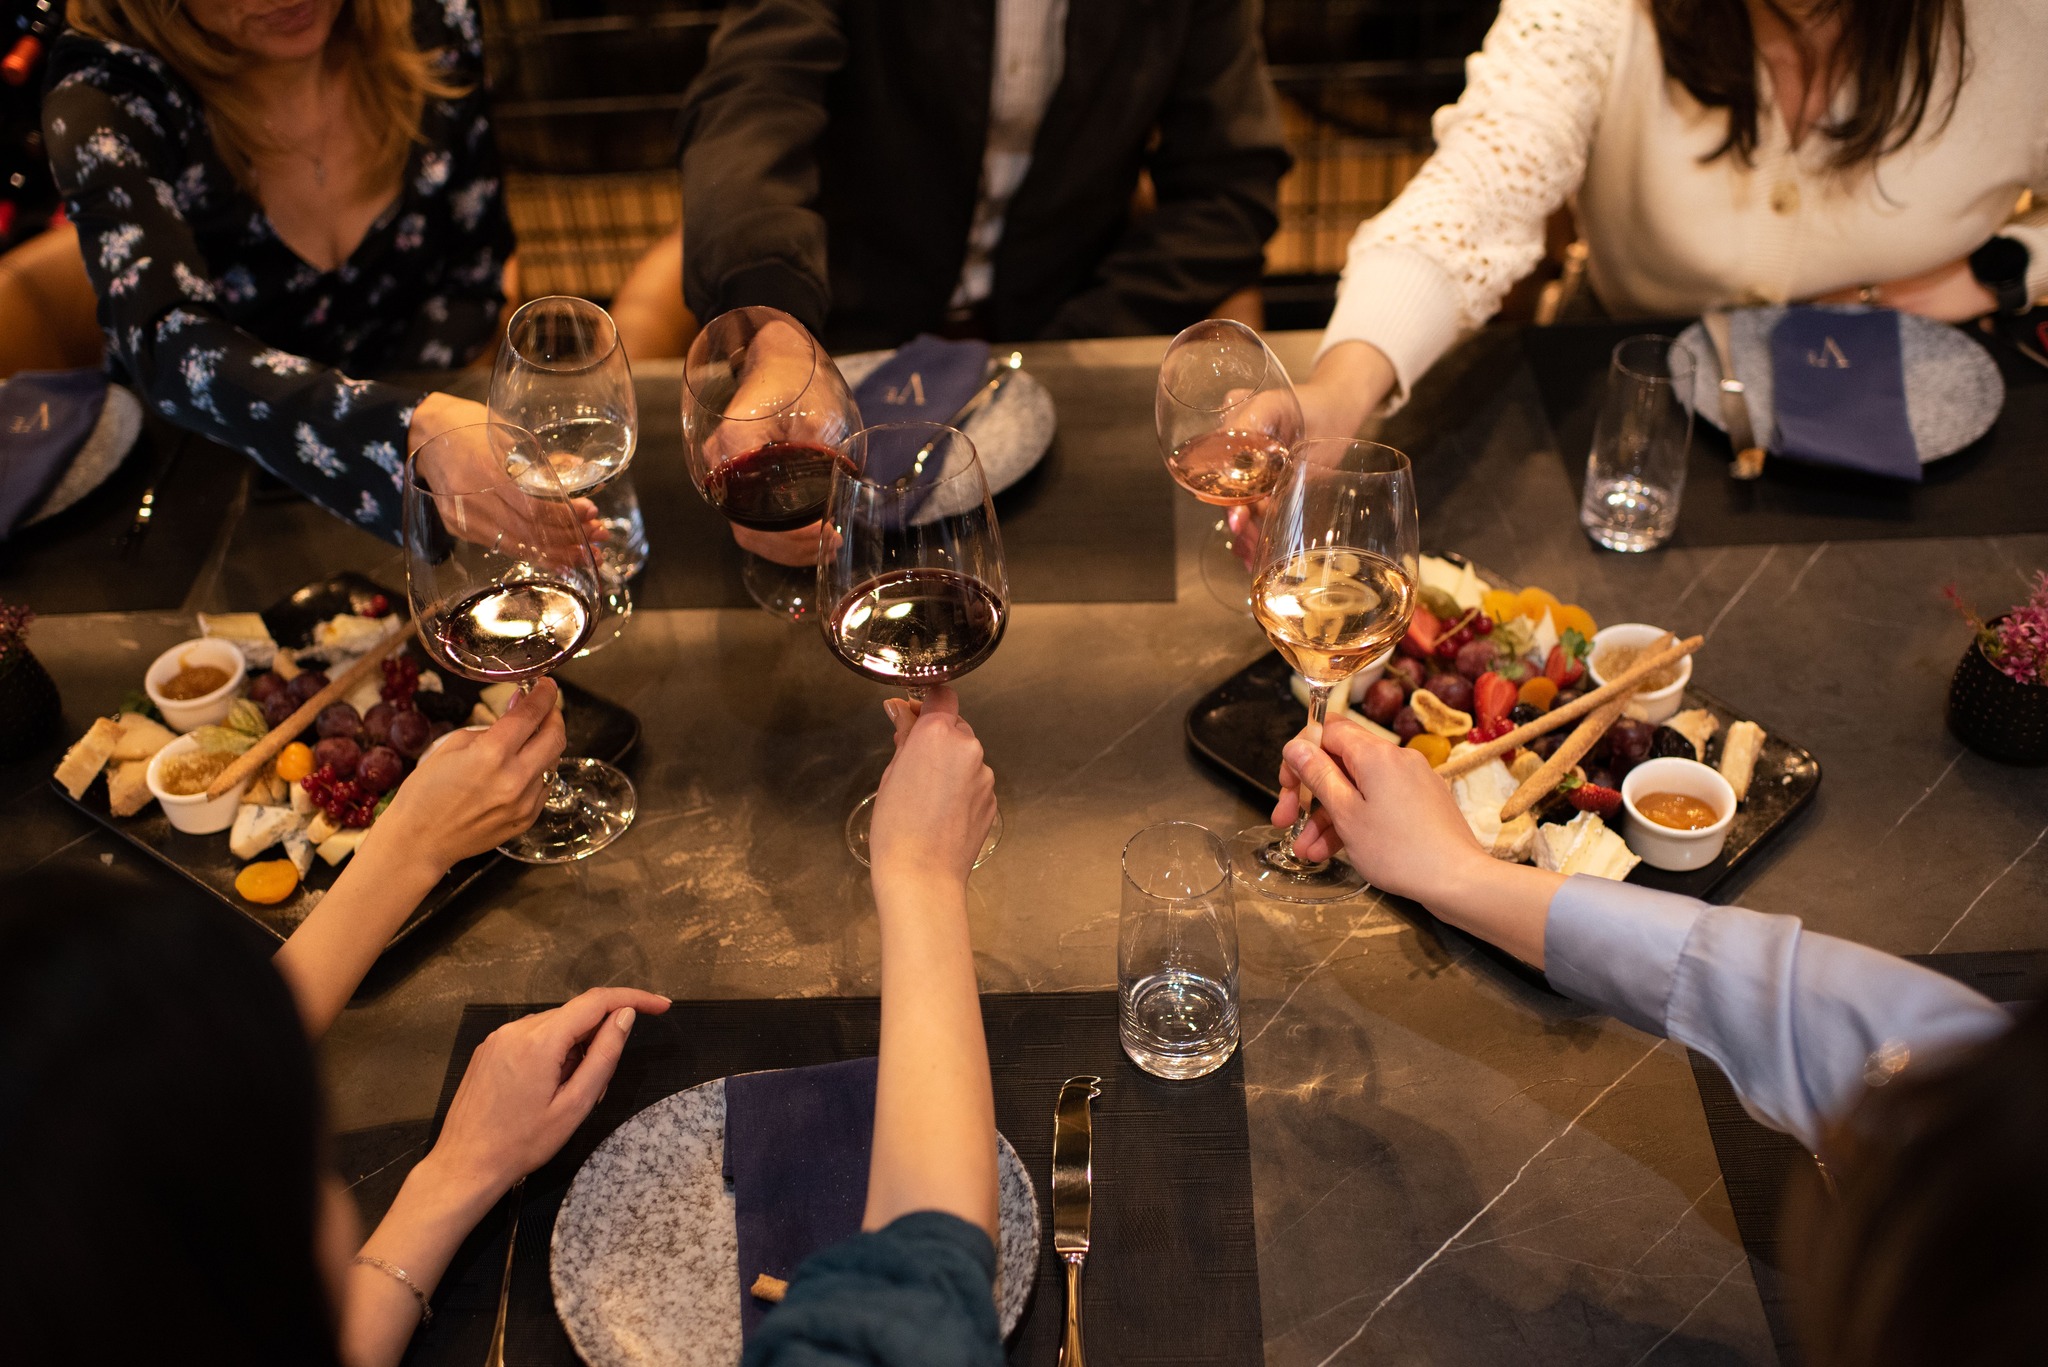 To Vino Fine γιορτάζει τον ένα χρόνο λειτουργίας του με μία Wine Tasting βραδιά